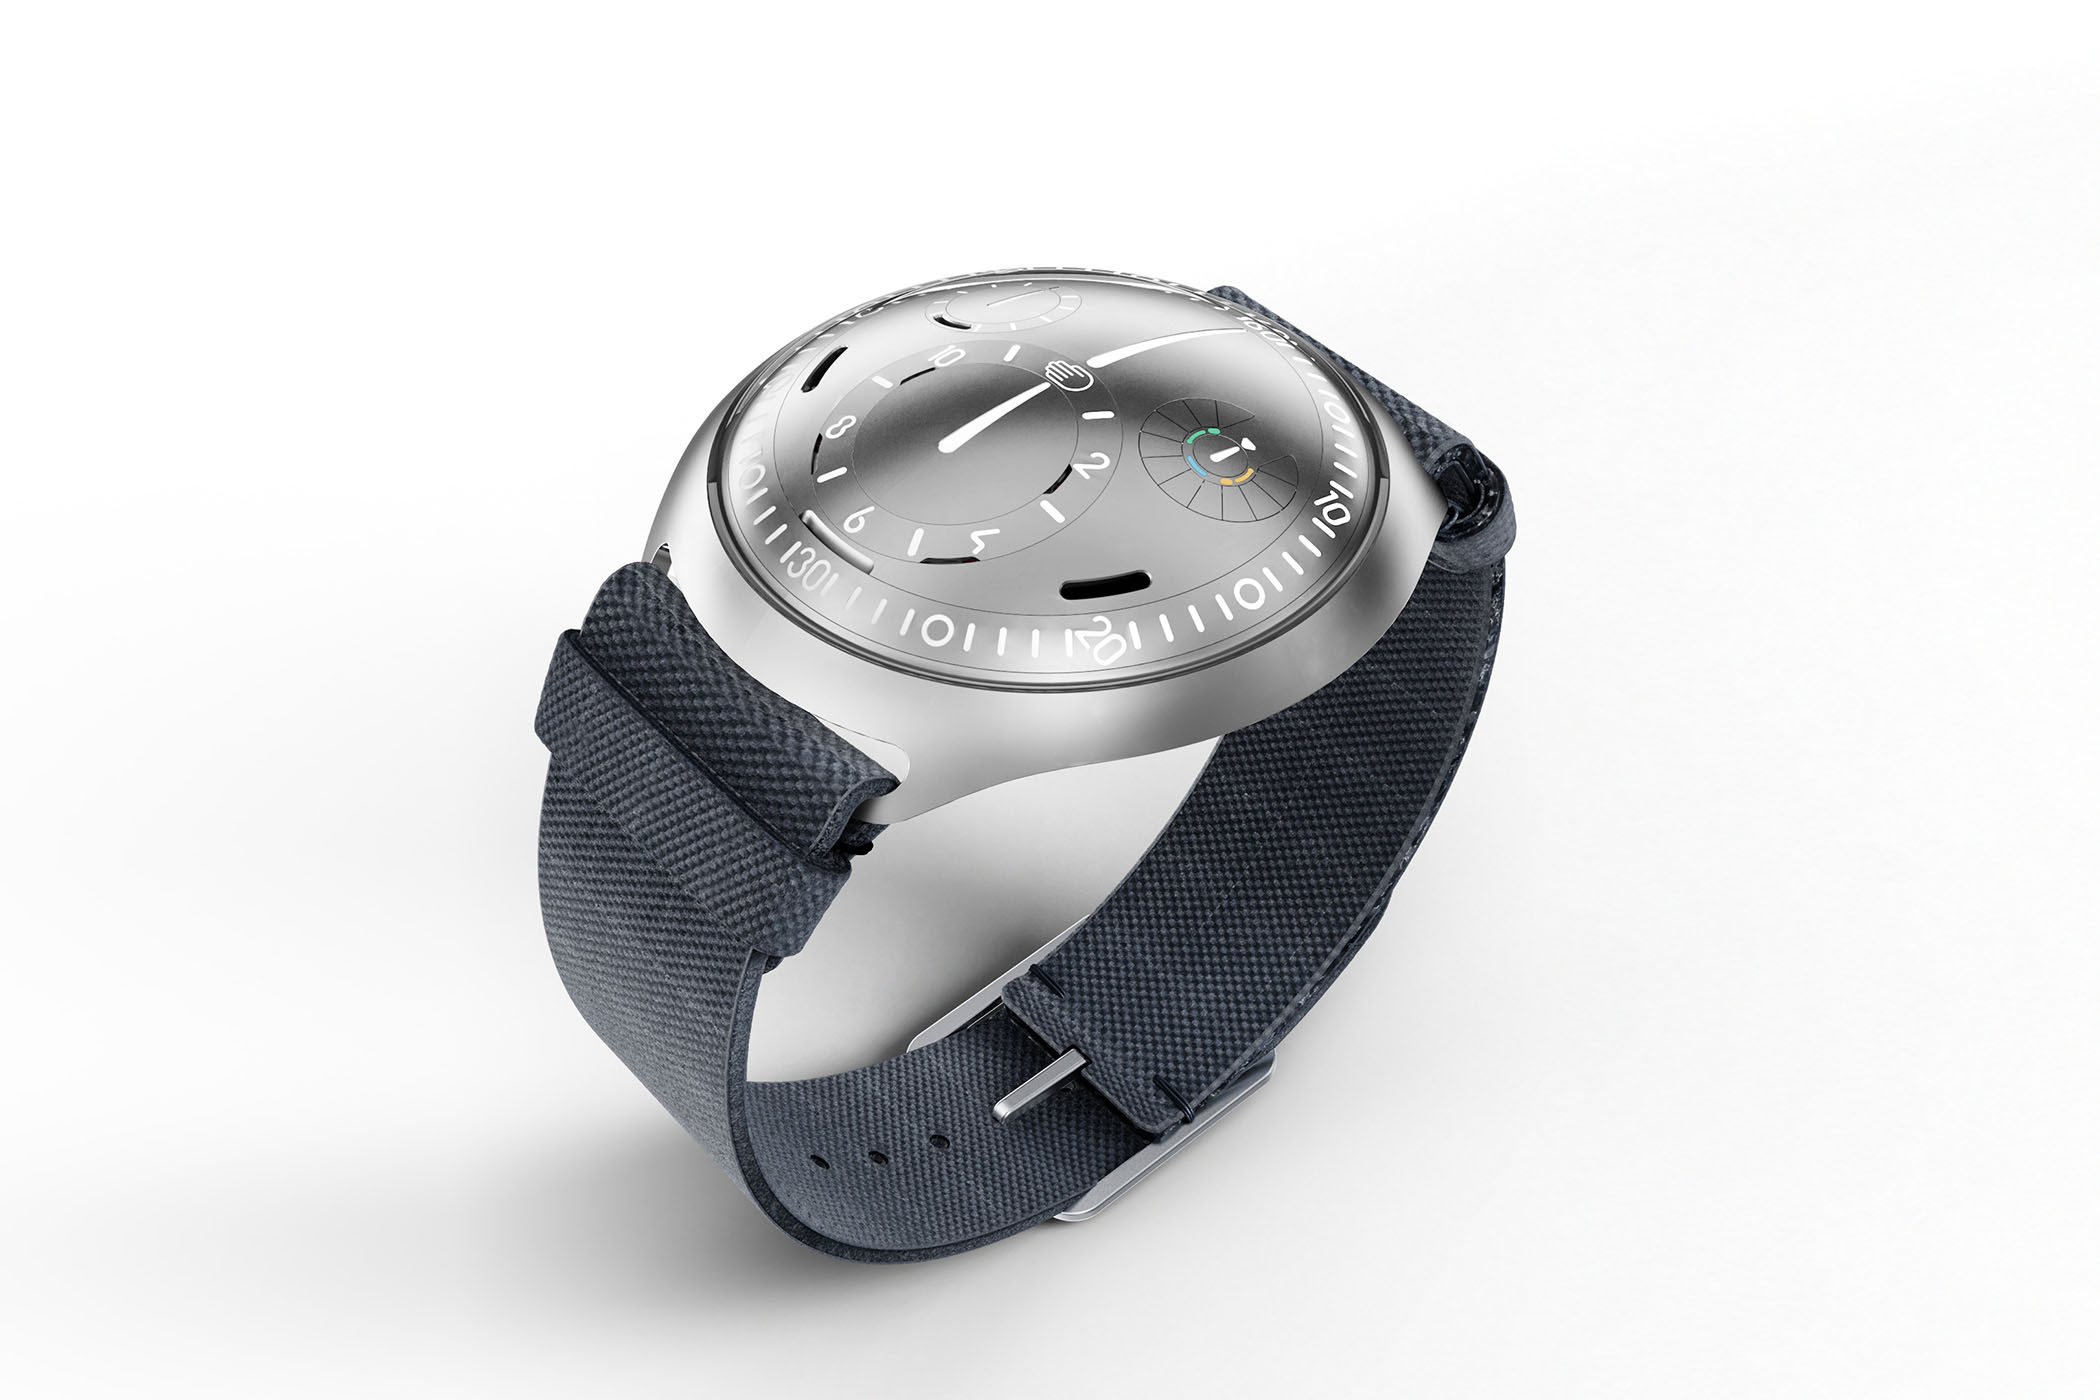 Ressence Type 2 E-Crown - first self-setting mechanical watch